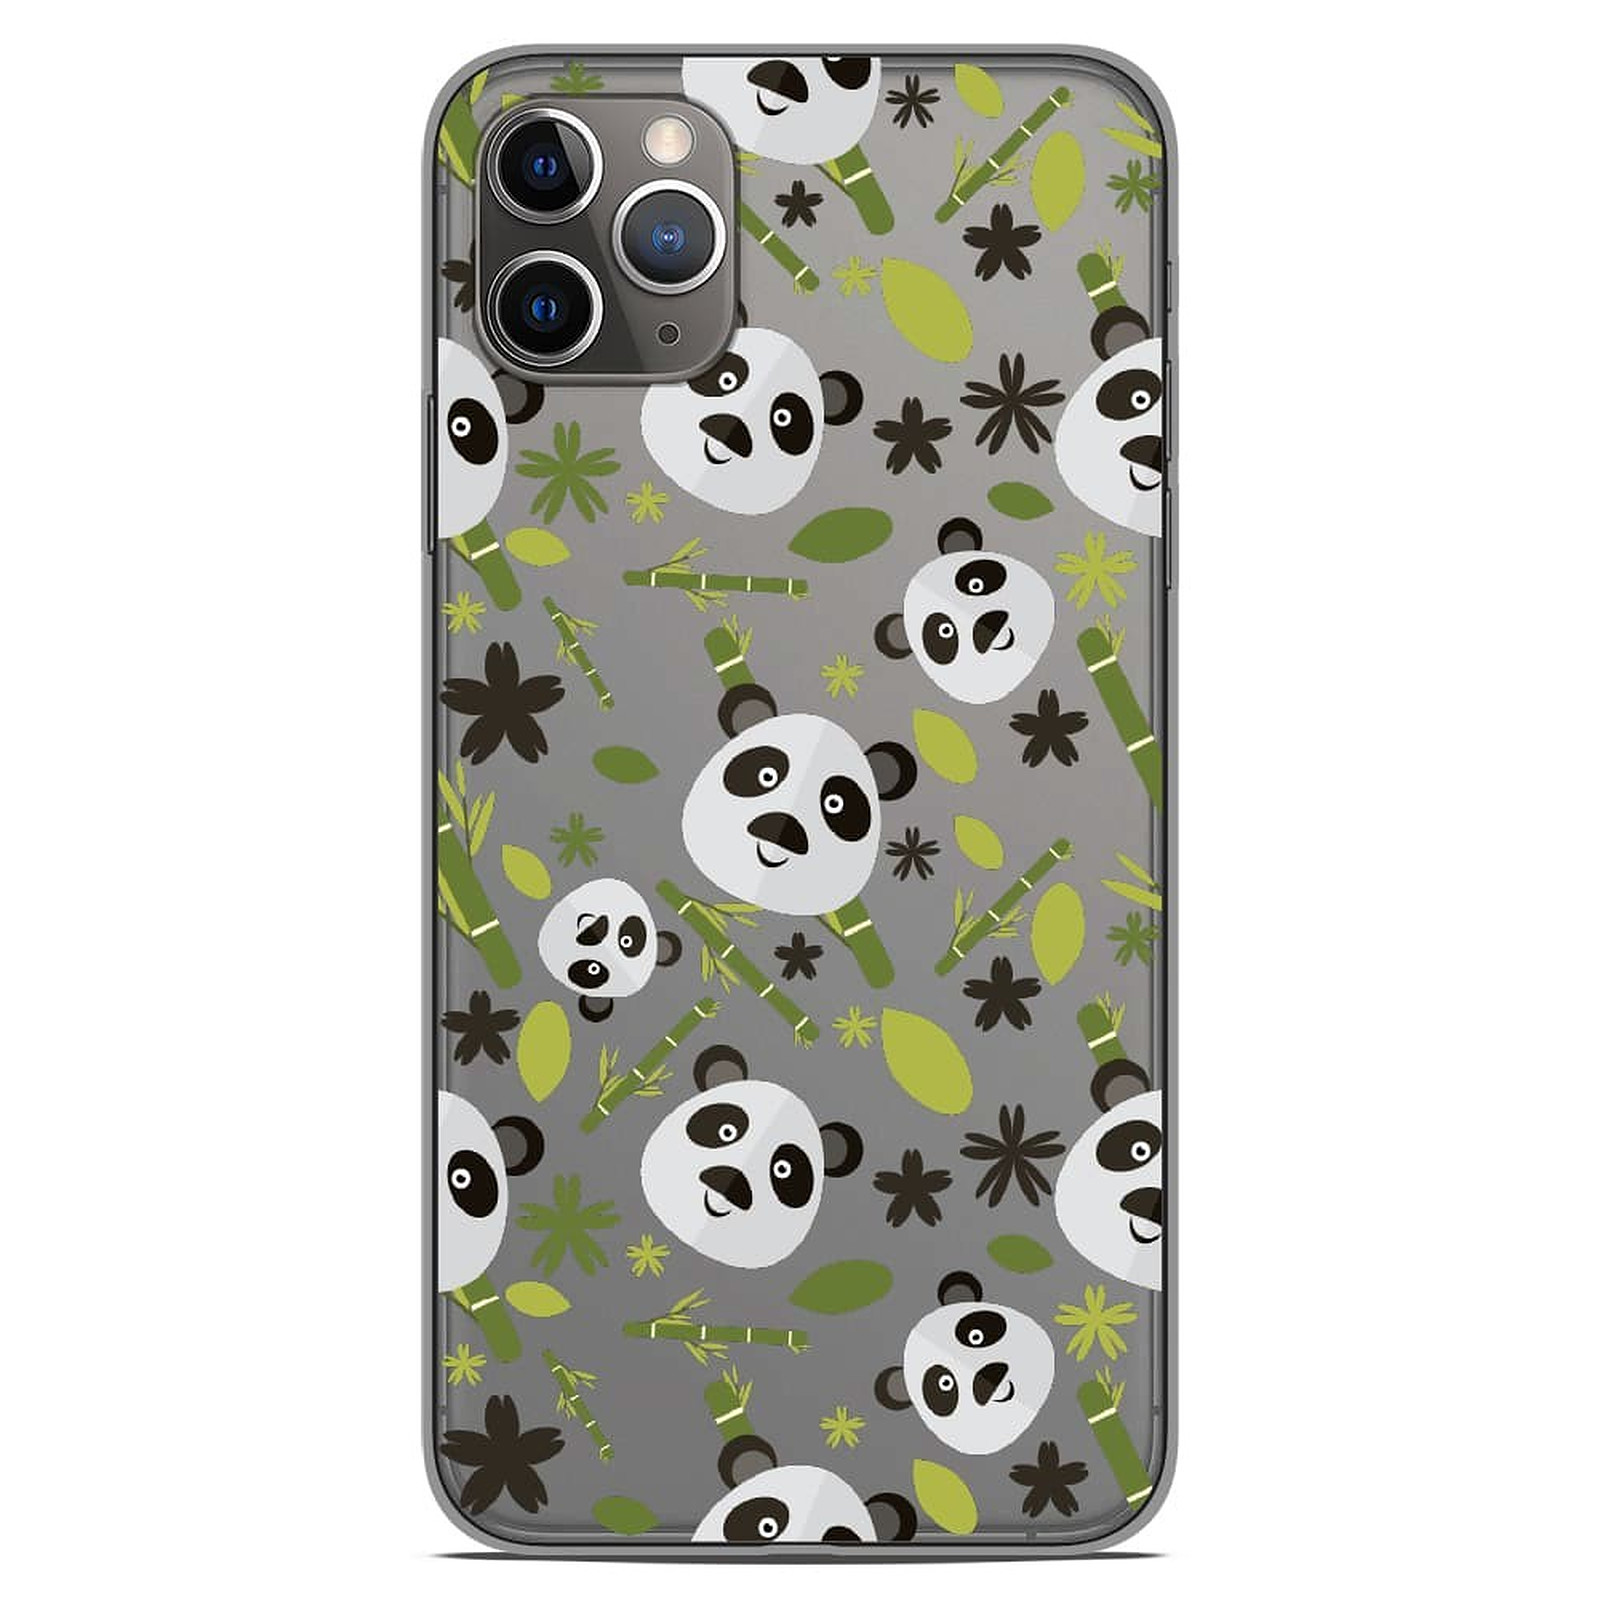 1001 Coques Coque silicone gel Apple iPhone 11 Pro Max motif Pandas et Bambou - Coque telephone 1001Coques